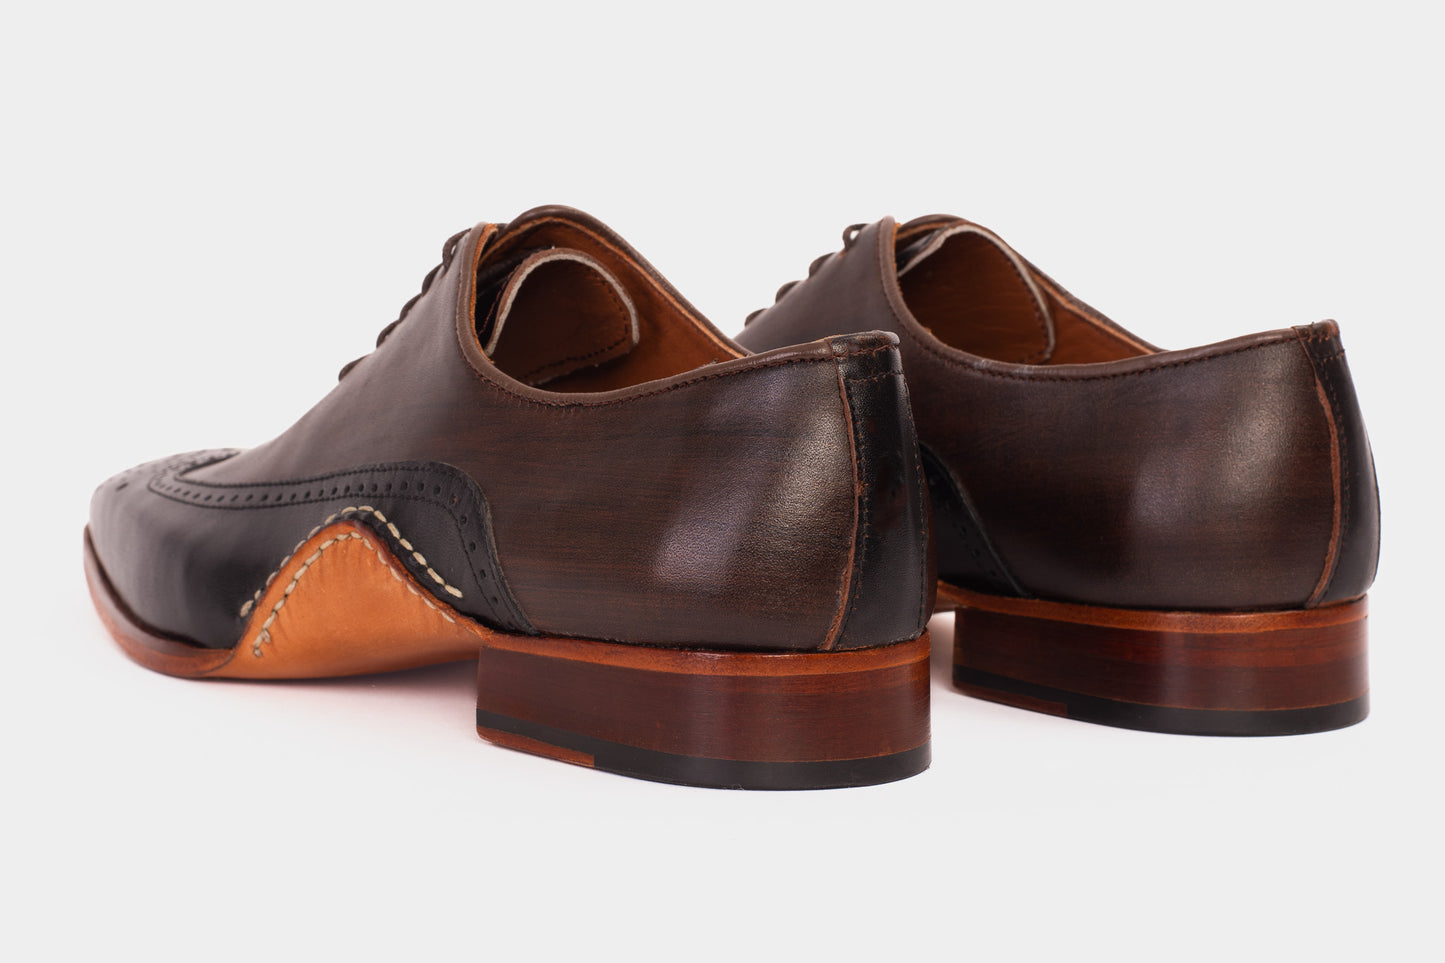 The Royal Hand Craft Black & Brown Wingtip Oxford Men Shoe